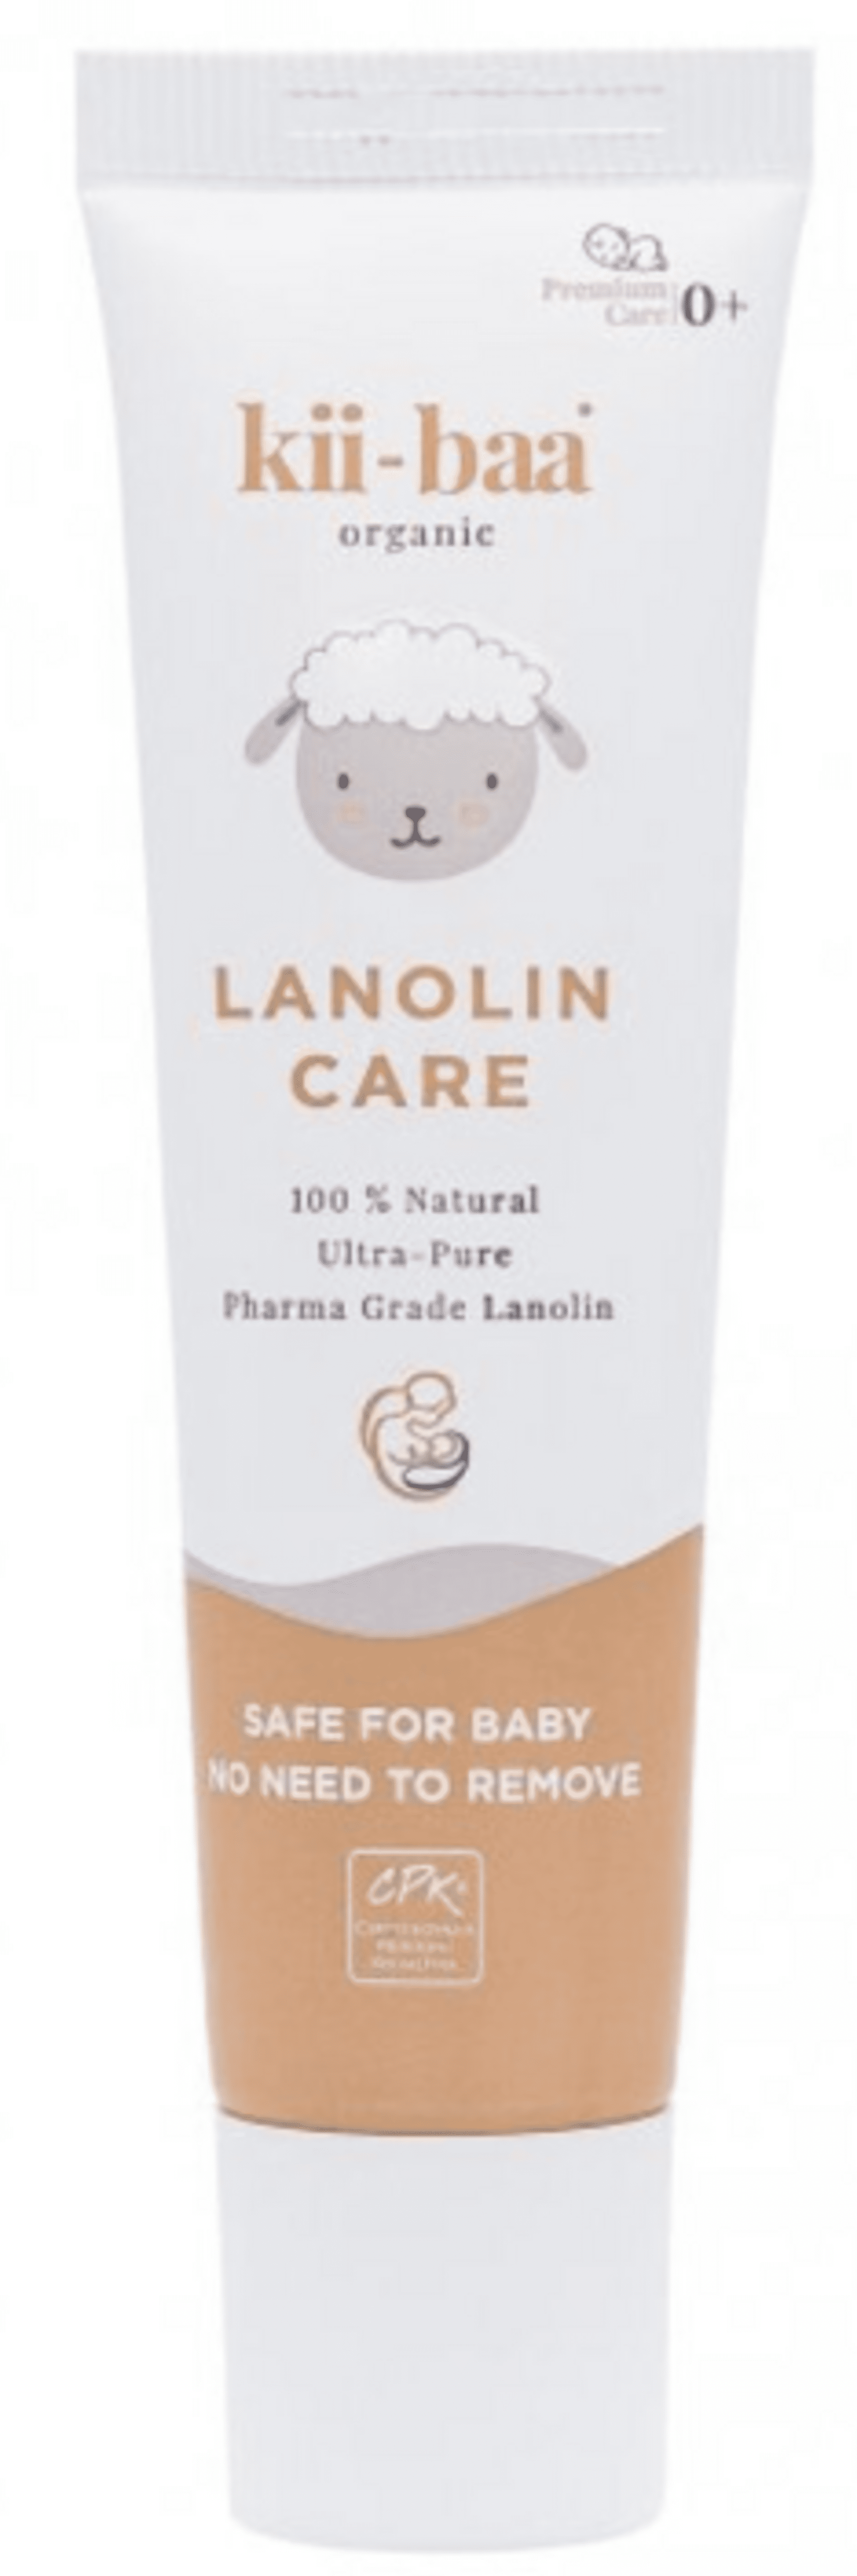 Levně Kii-baa organic Lanolin care ultračistý 100 % 0+ 30 g